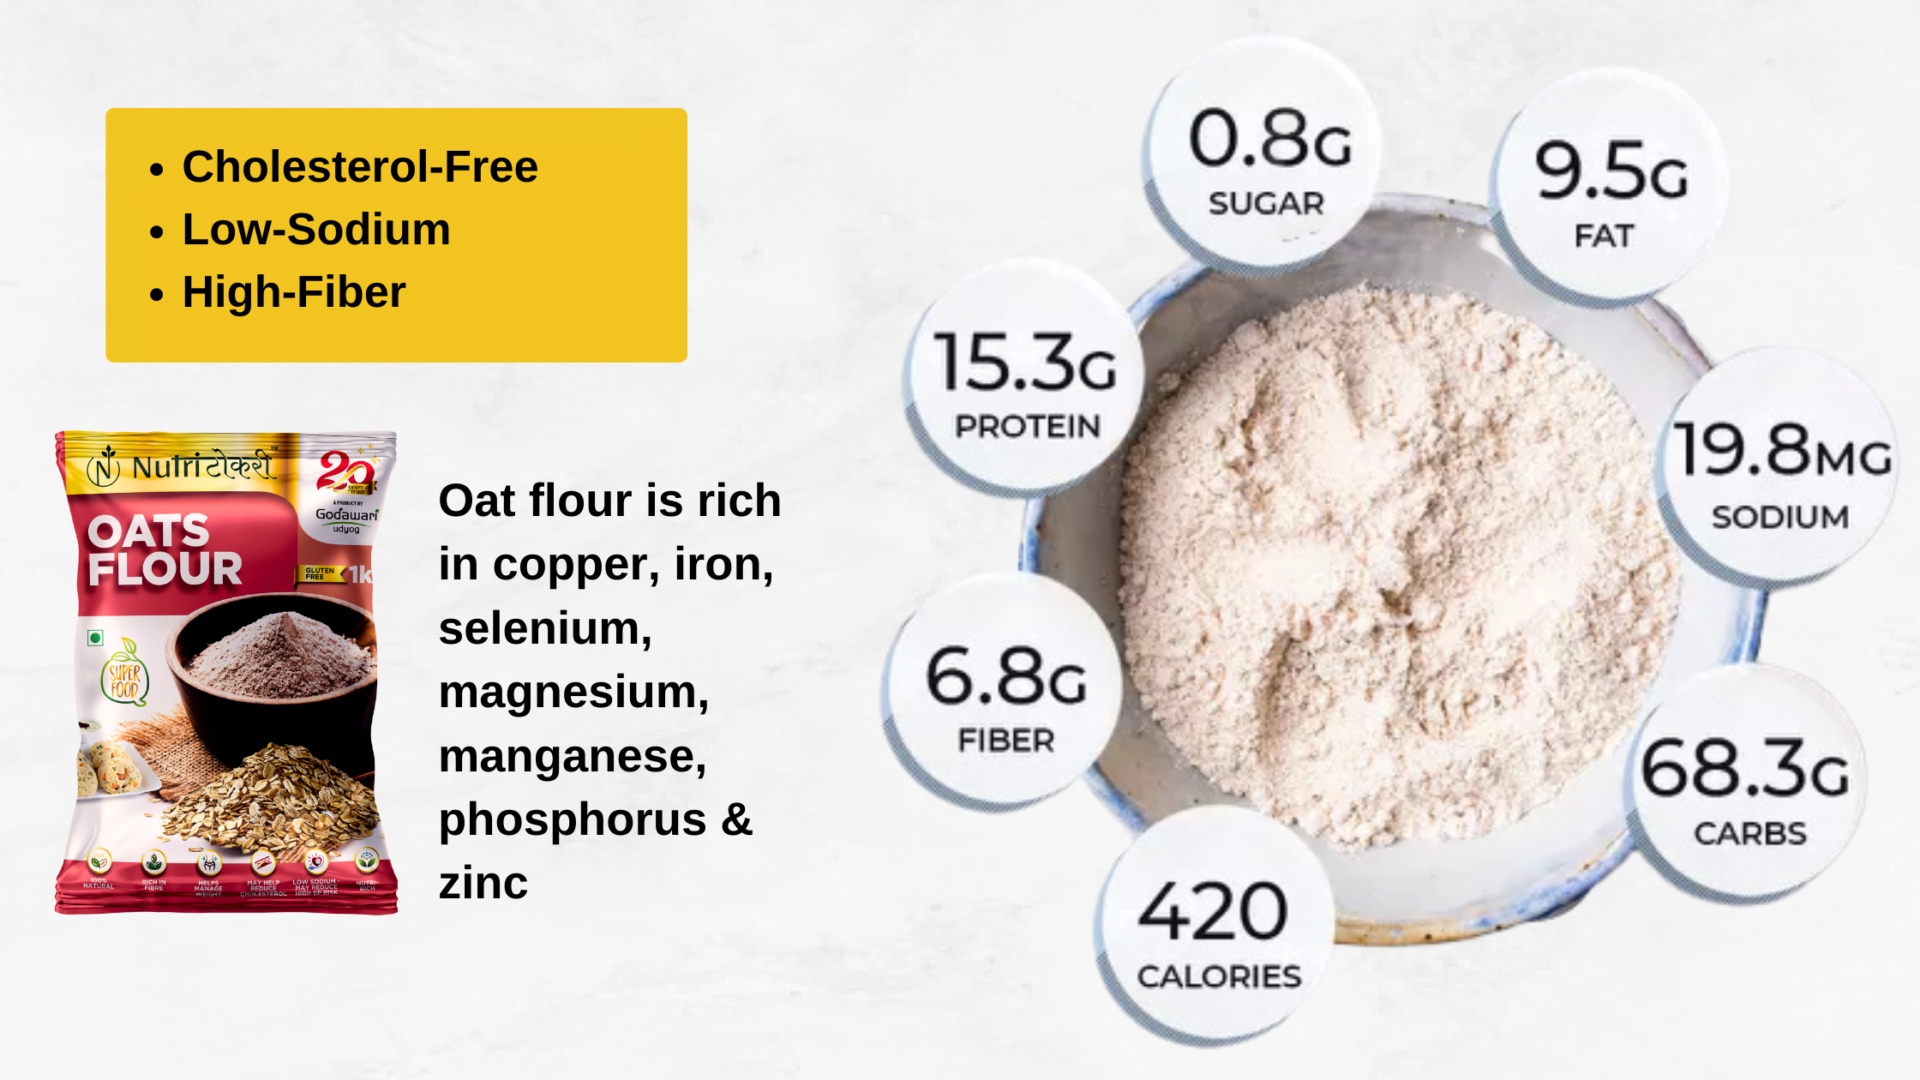 1. Nutritional Value of NutriTokri’s Oats Flour: 